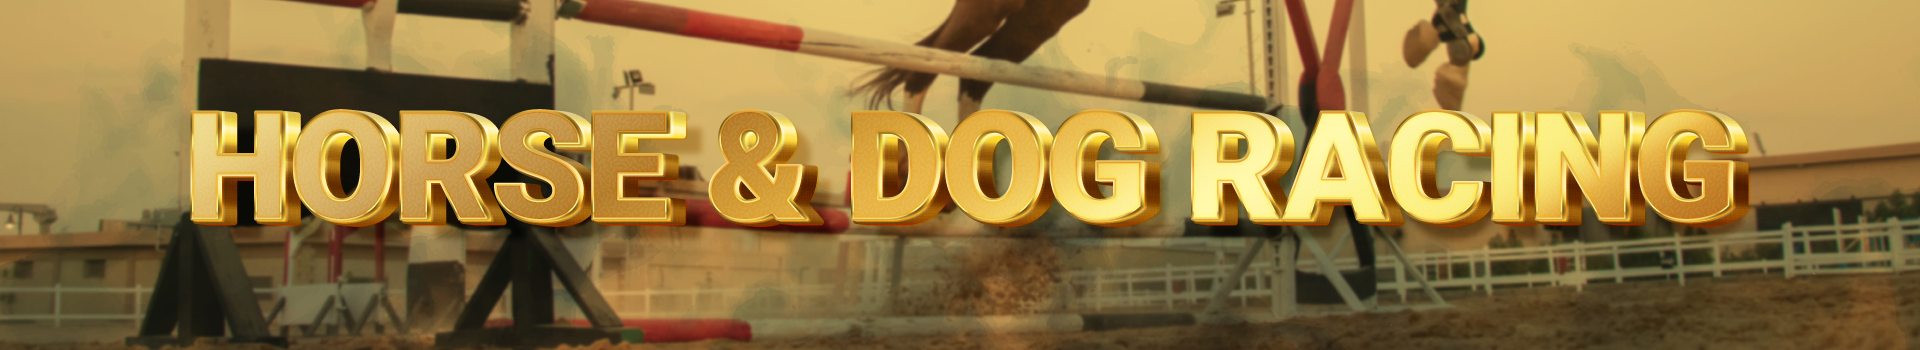 Horse & Dog Racing